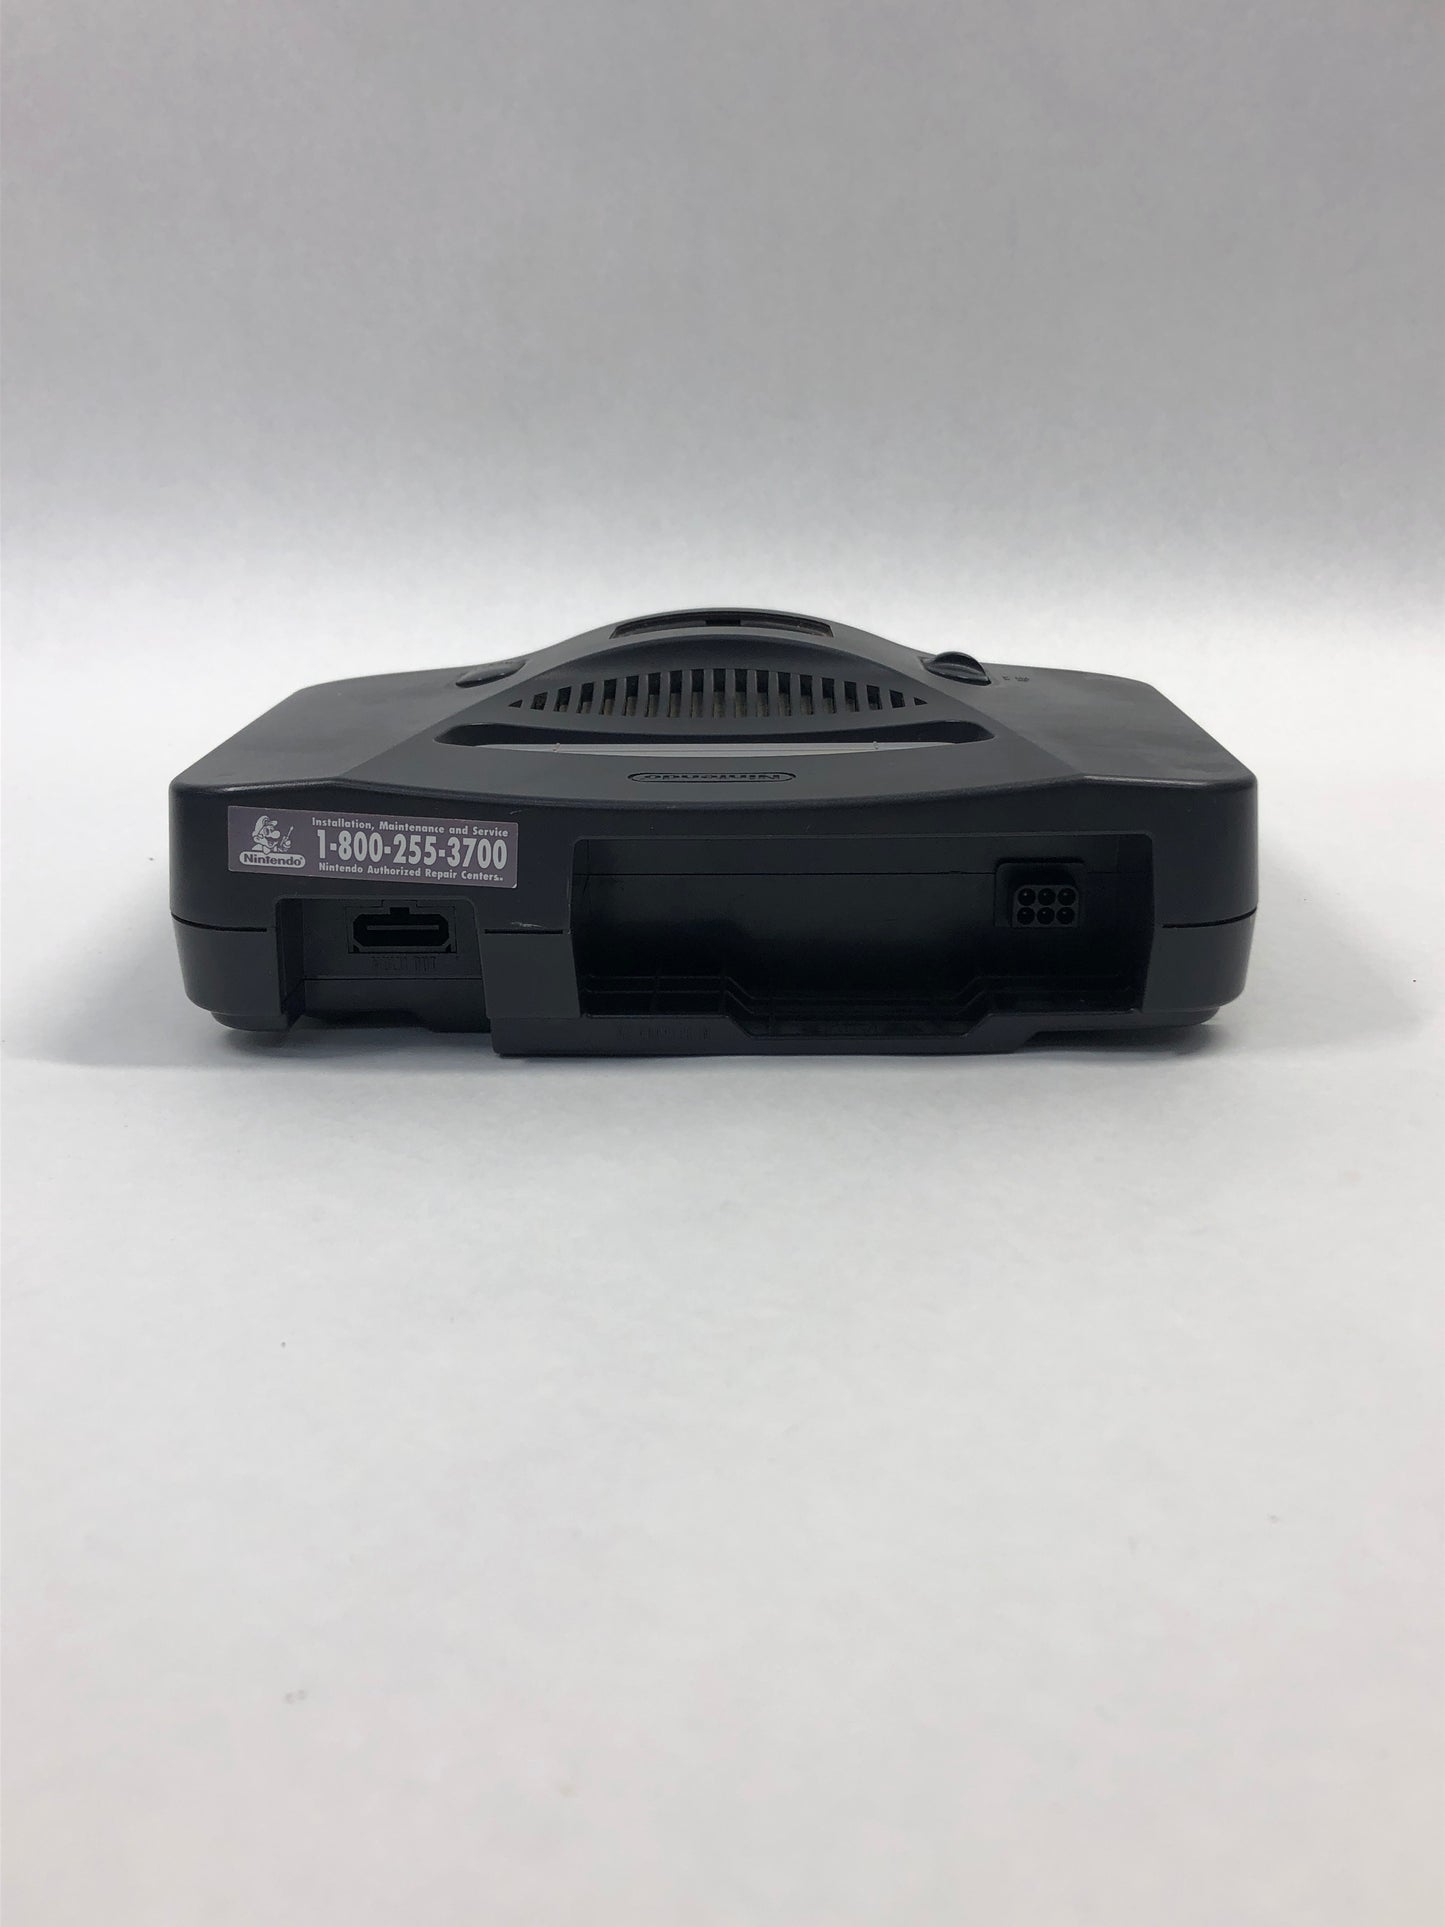 Nintendo N64 Video Game Console NUS-001 Black